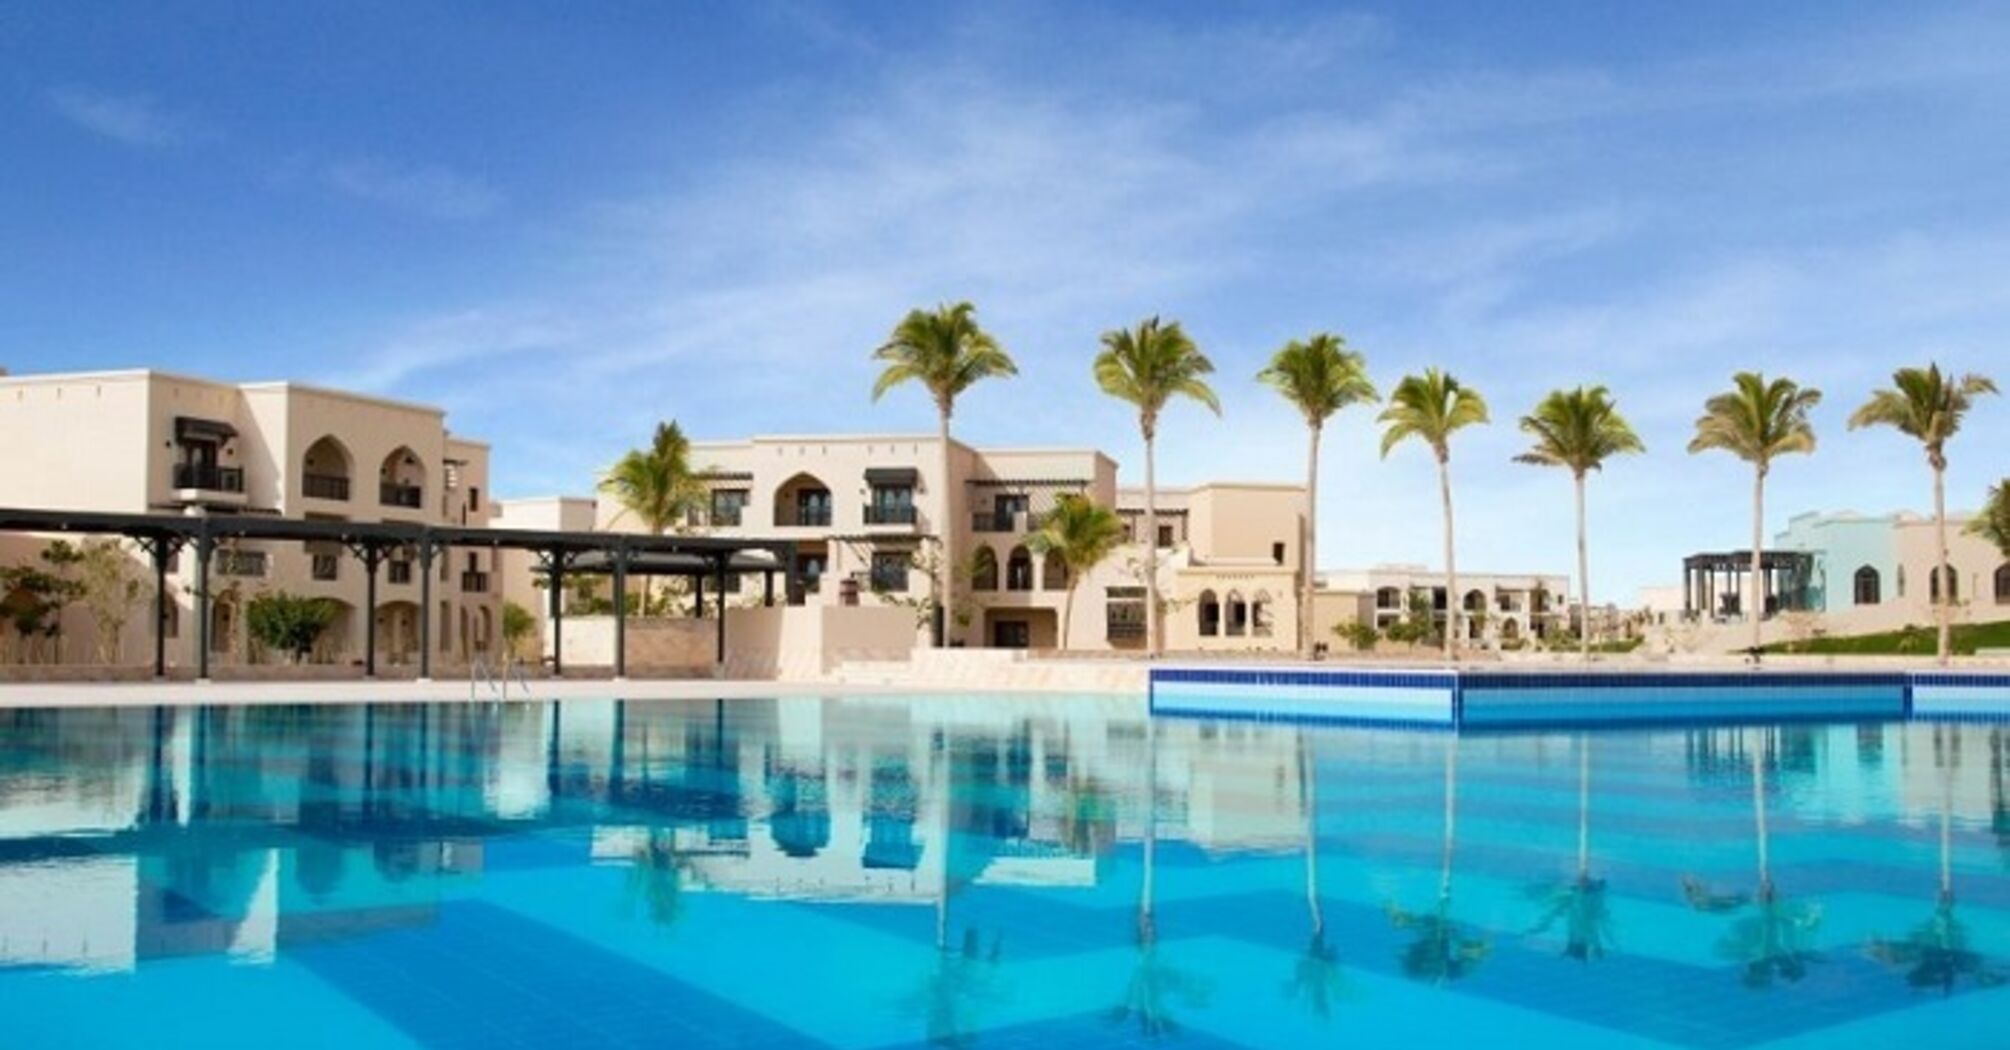 Salalah Rotana Resort: Eco-friendly accommodation and high level of hospitality